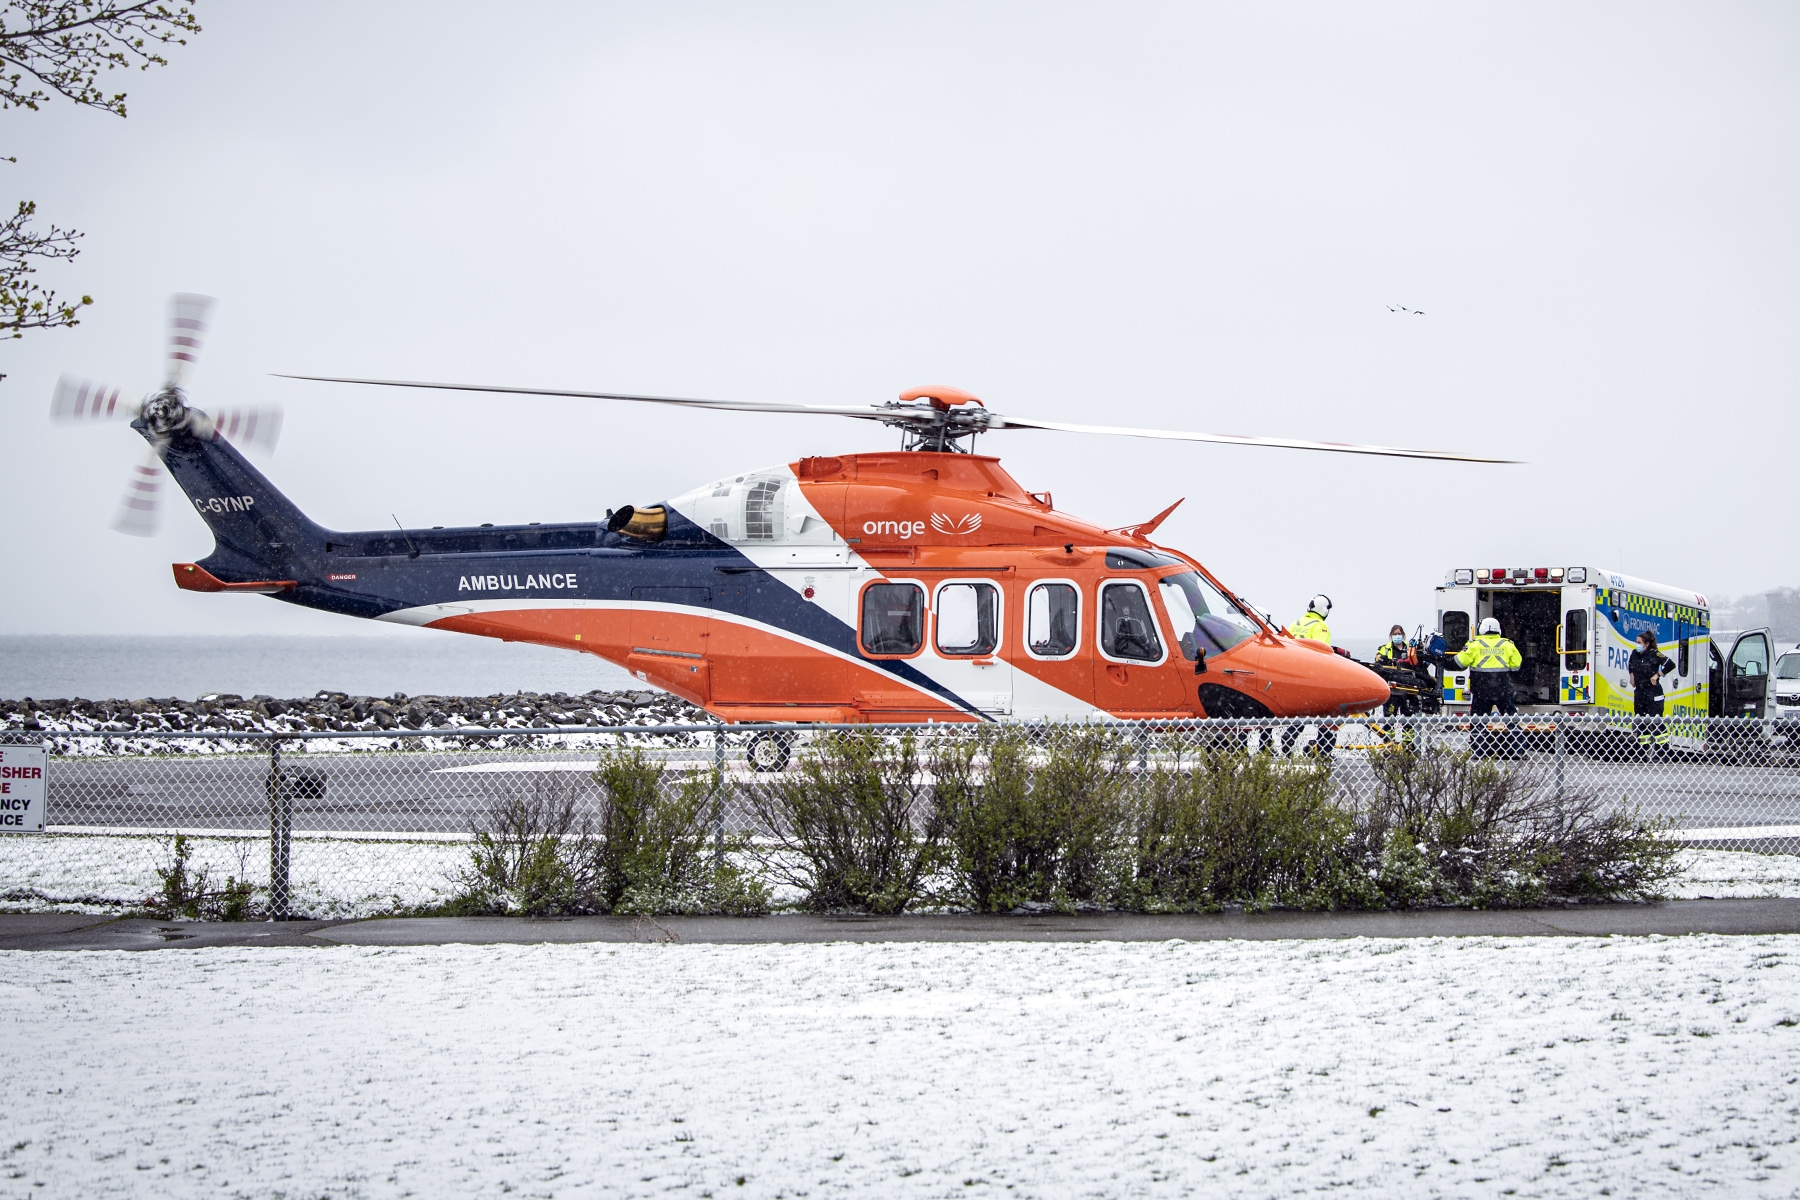 An Orgne air ambulance arrives at our KGH site